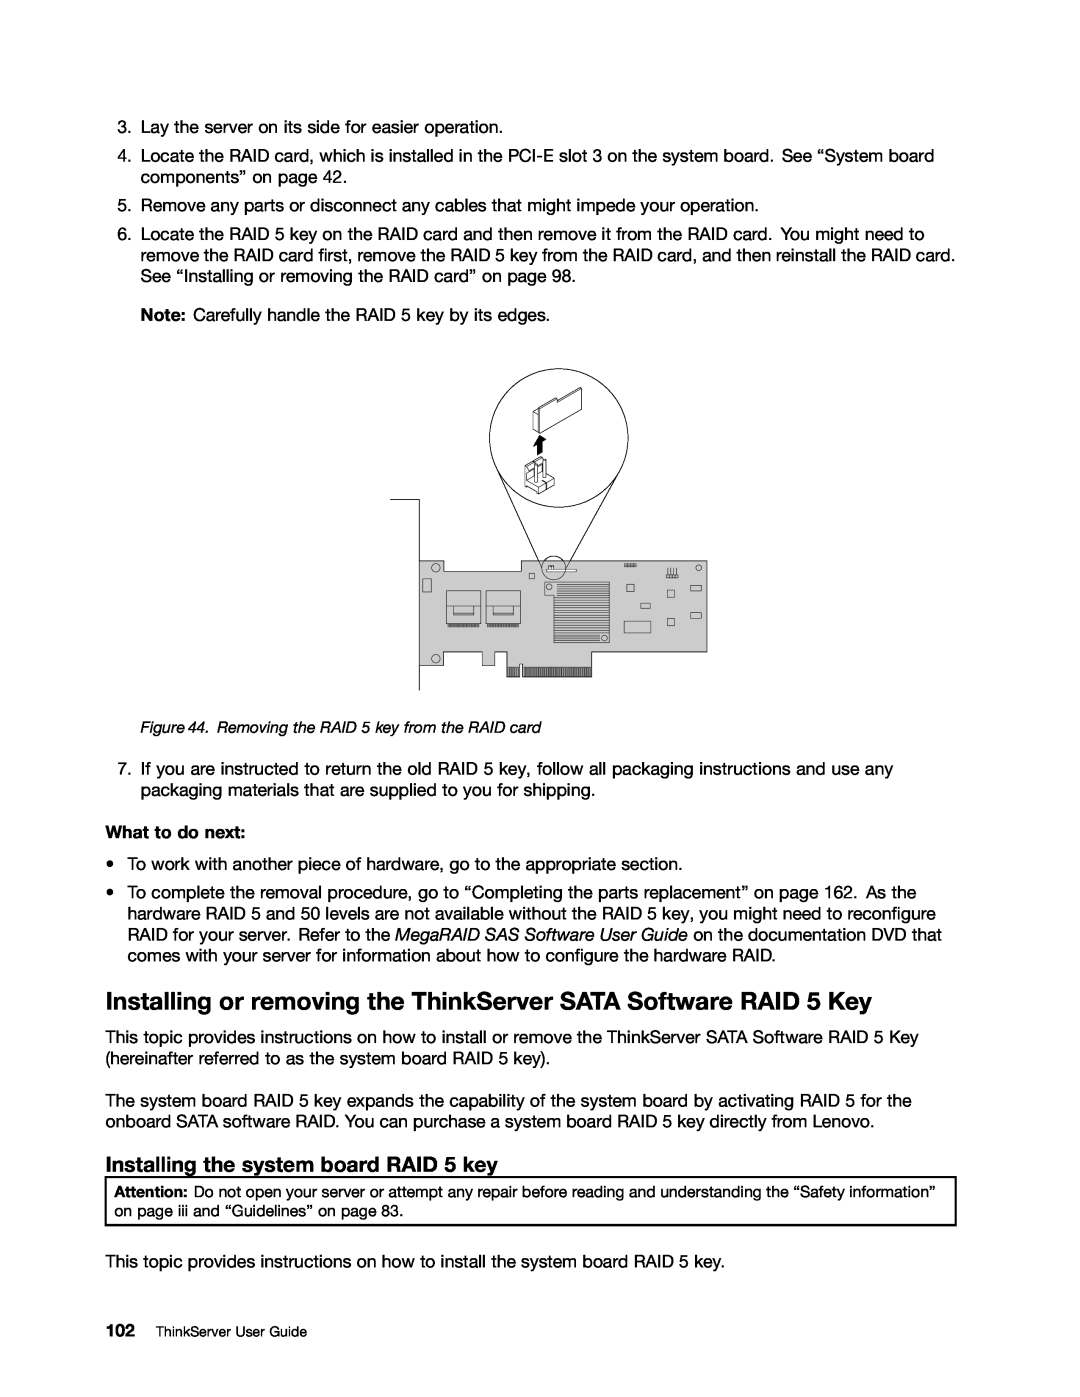 Lenovo 391, 387 Installing or removing the ThinkServer SATA Software RAID 5 Key, Installing the system board RAID 5 key 